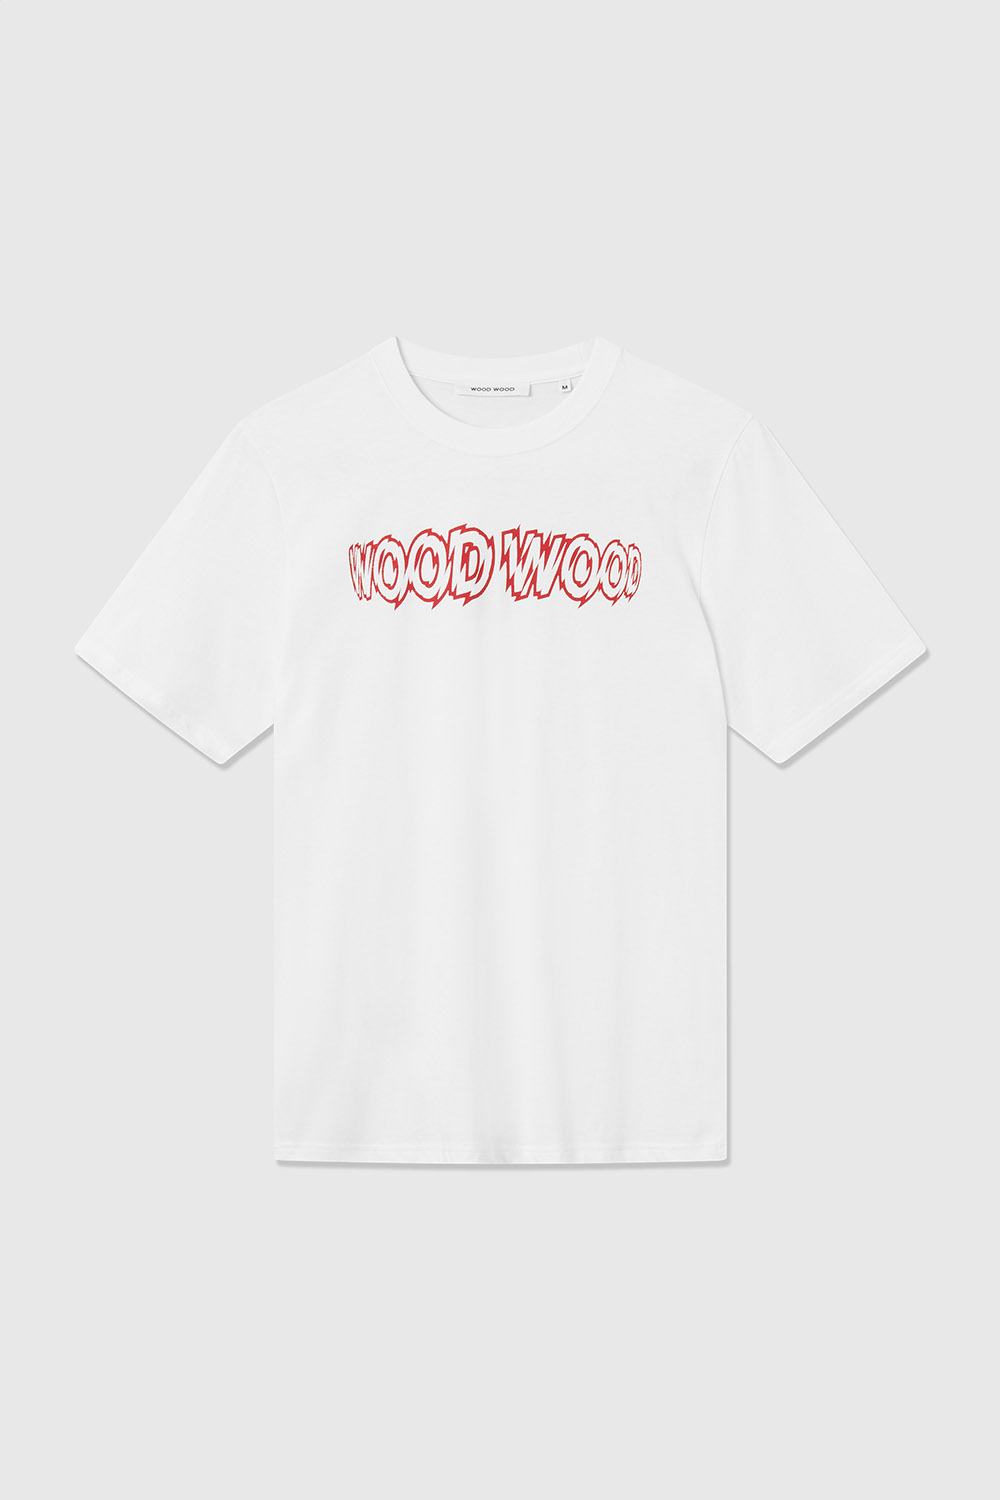 Wood Wood Bobby shatter logo T-shirt White | WoodWood.com